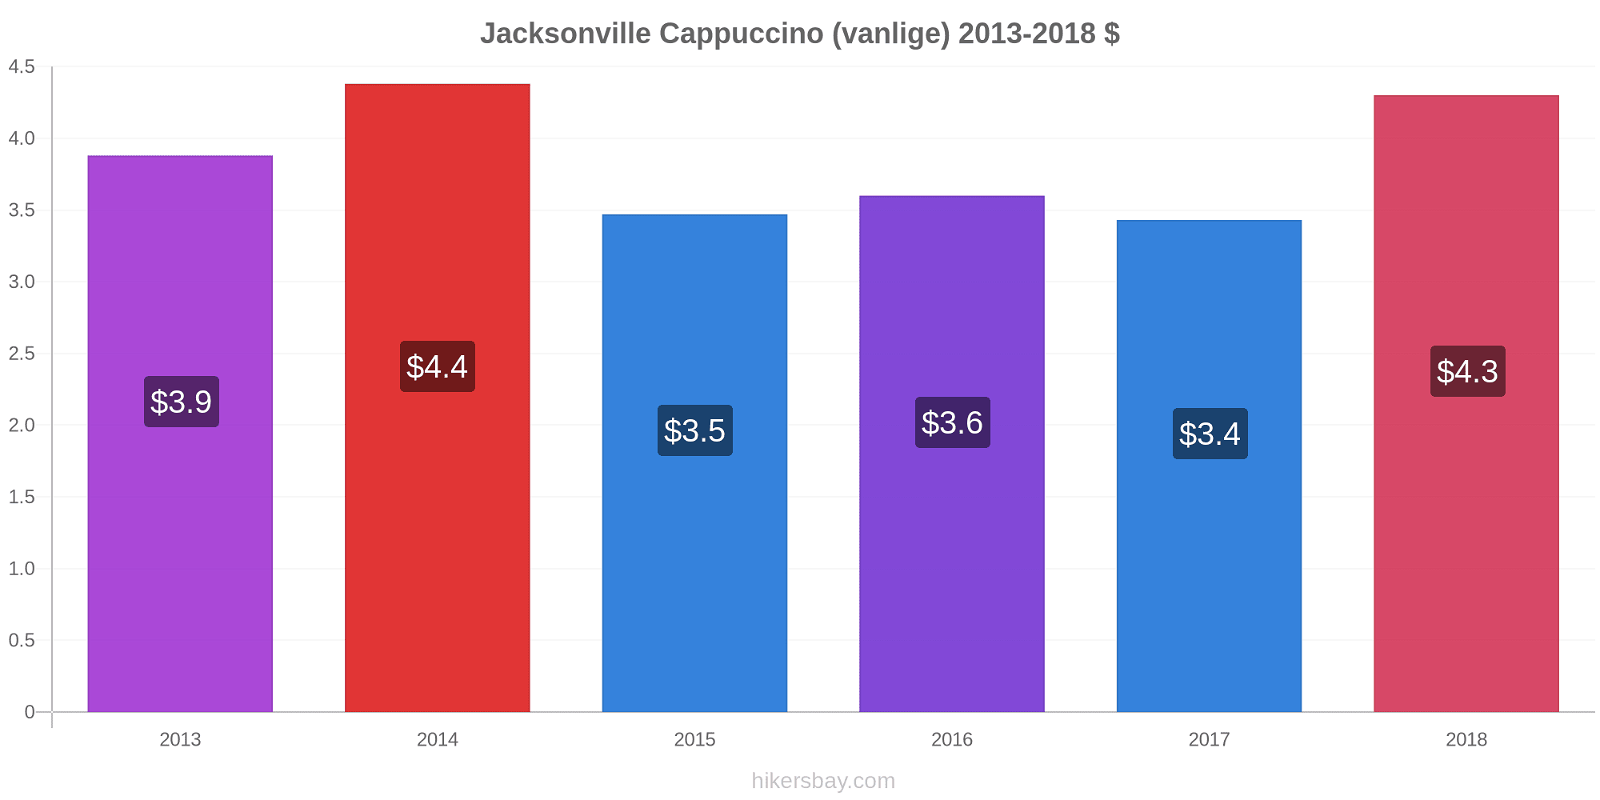 Jacksonville prisendringer Cappuccino (vanlige) hikersbay.com